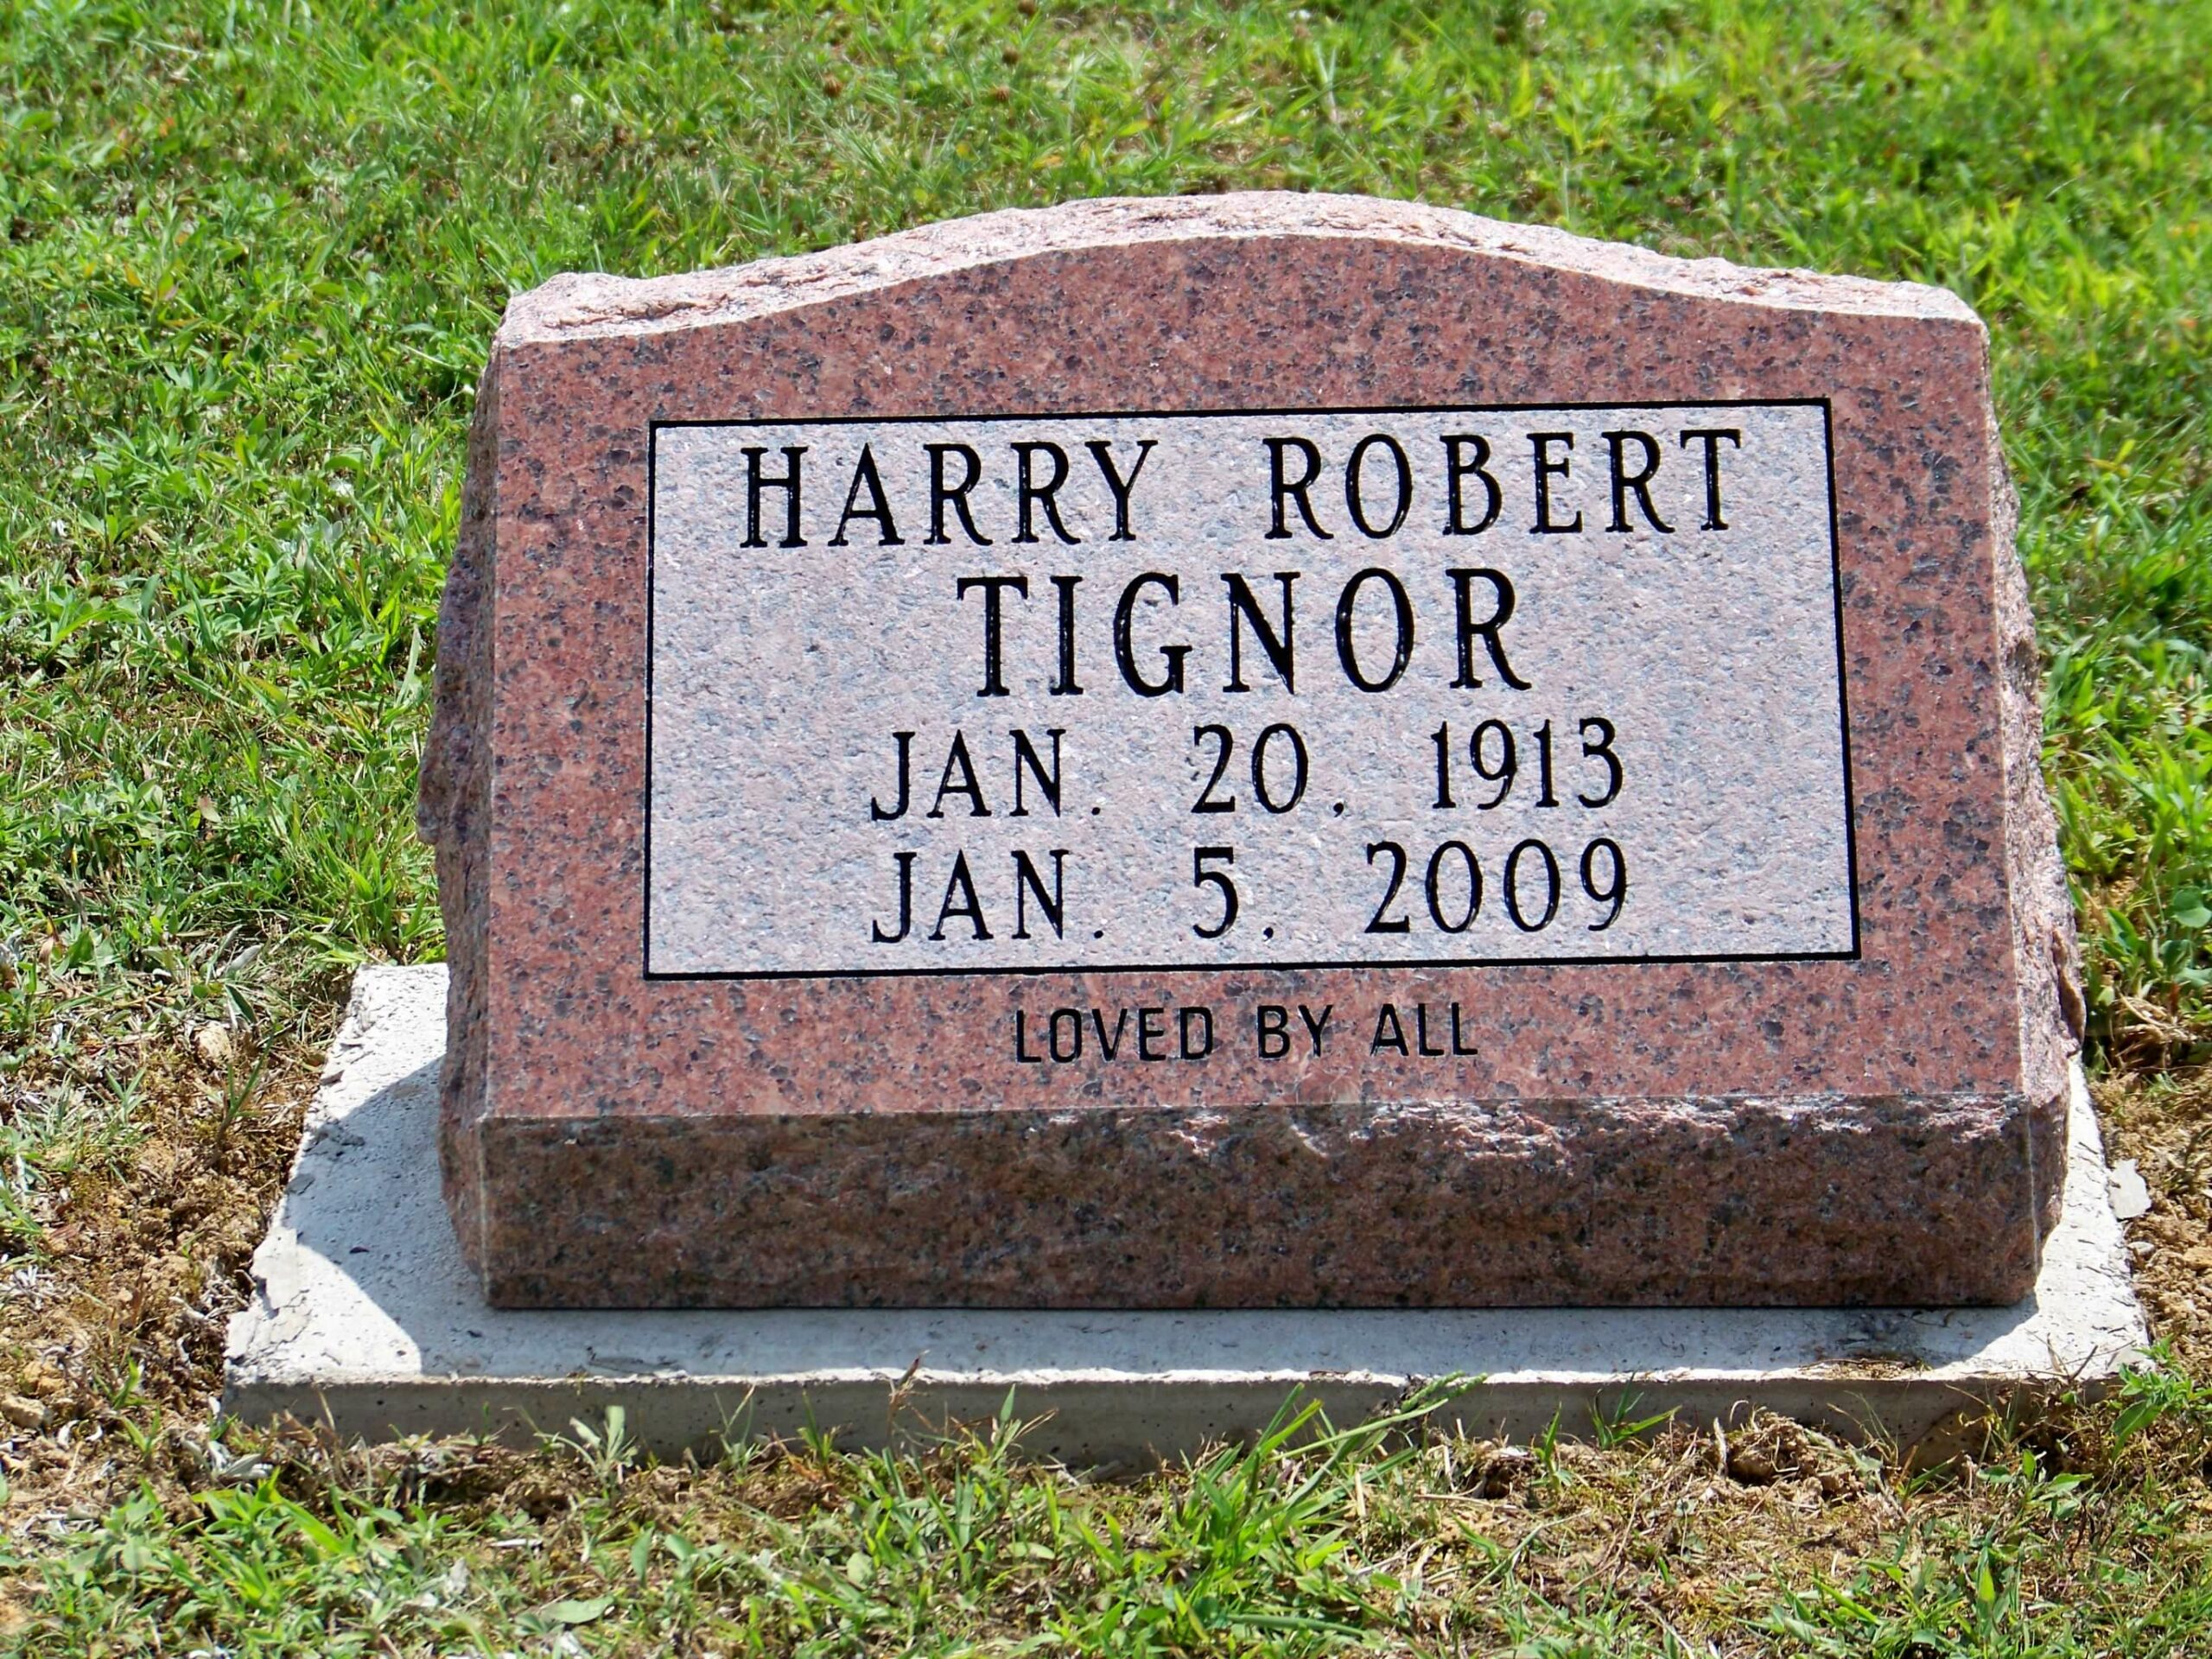 Tignor, Harry Robert